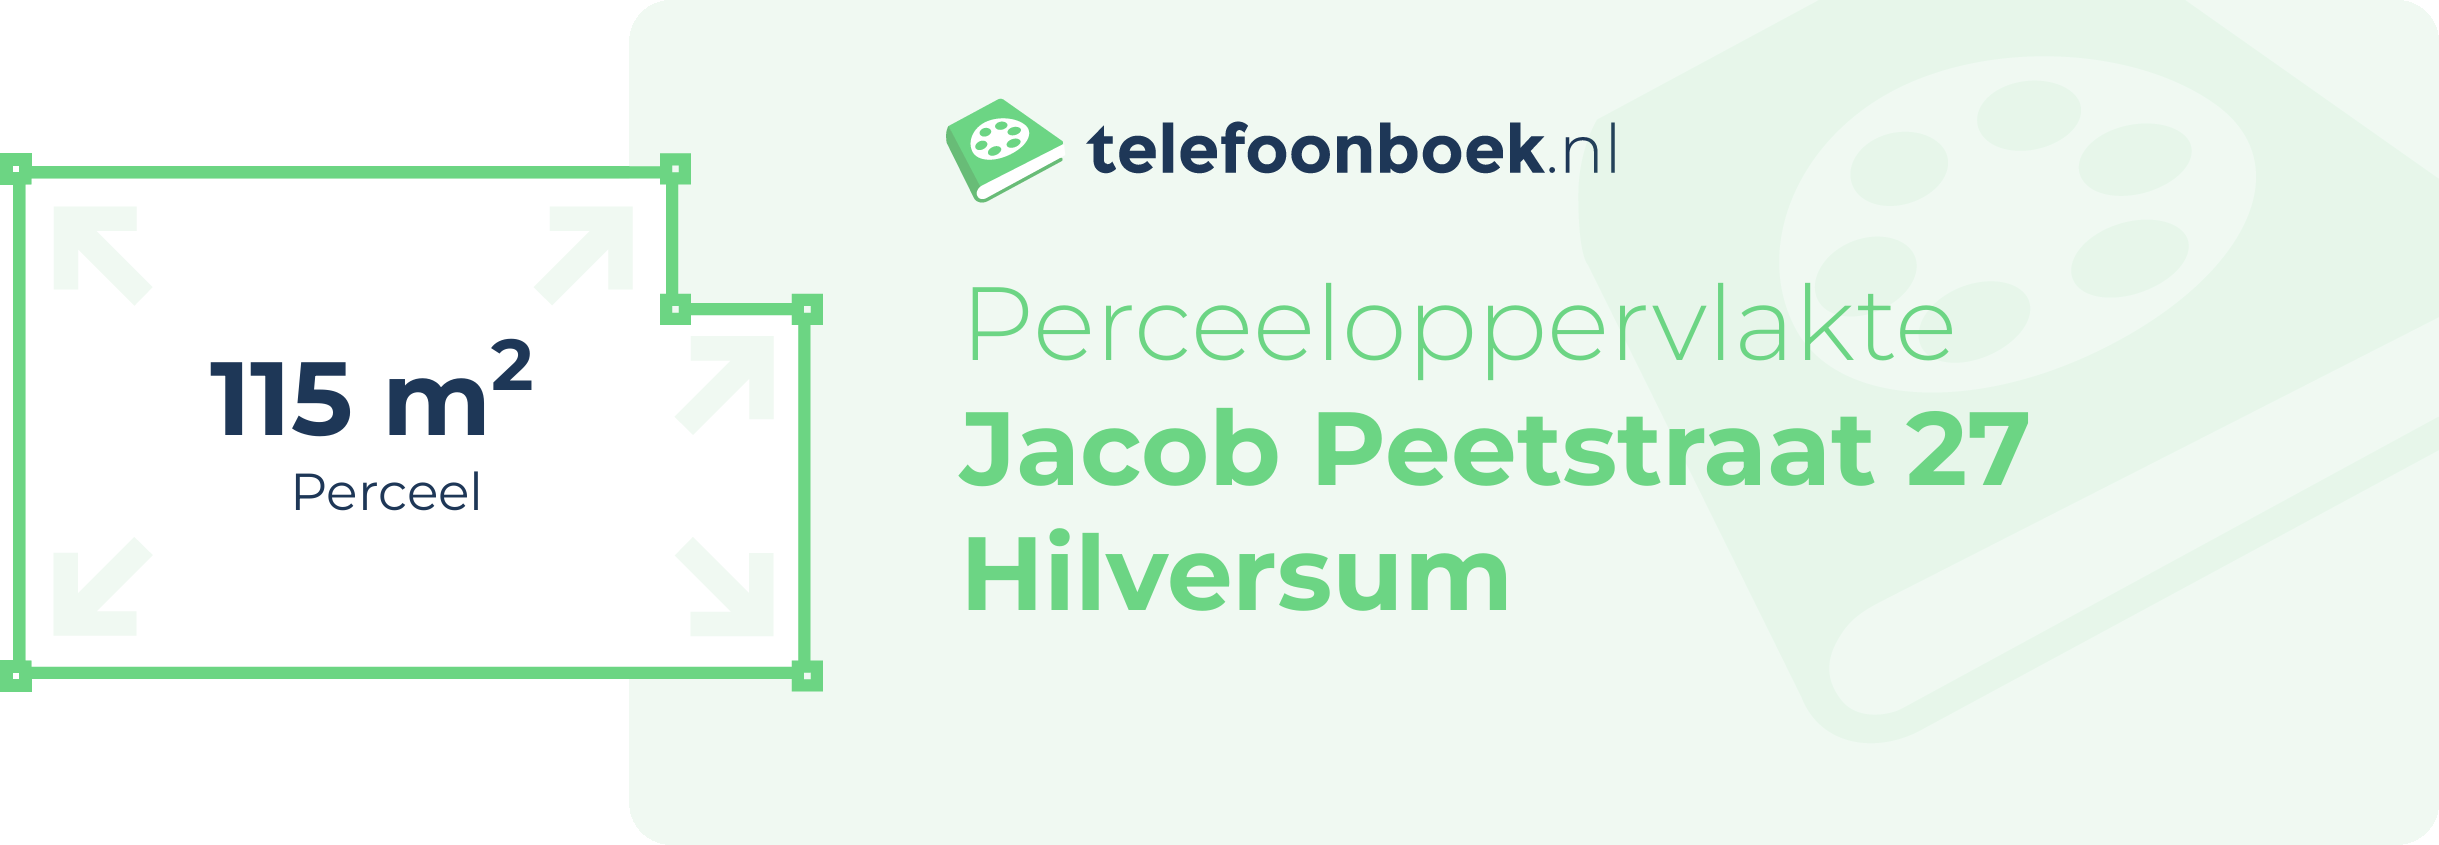 Perceeloppervlakte Jacob Peetstraat 27 Hilversum